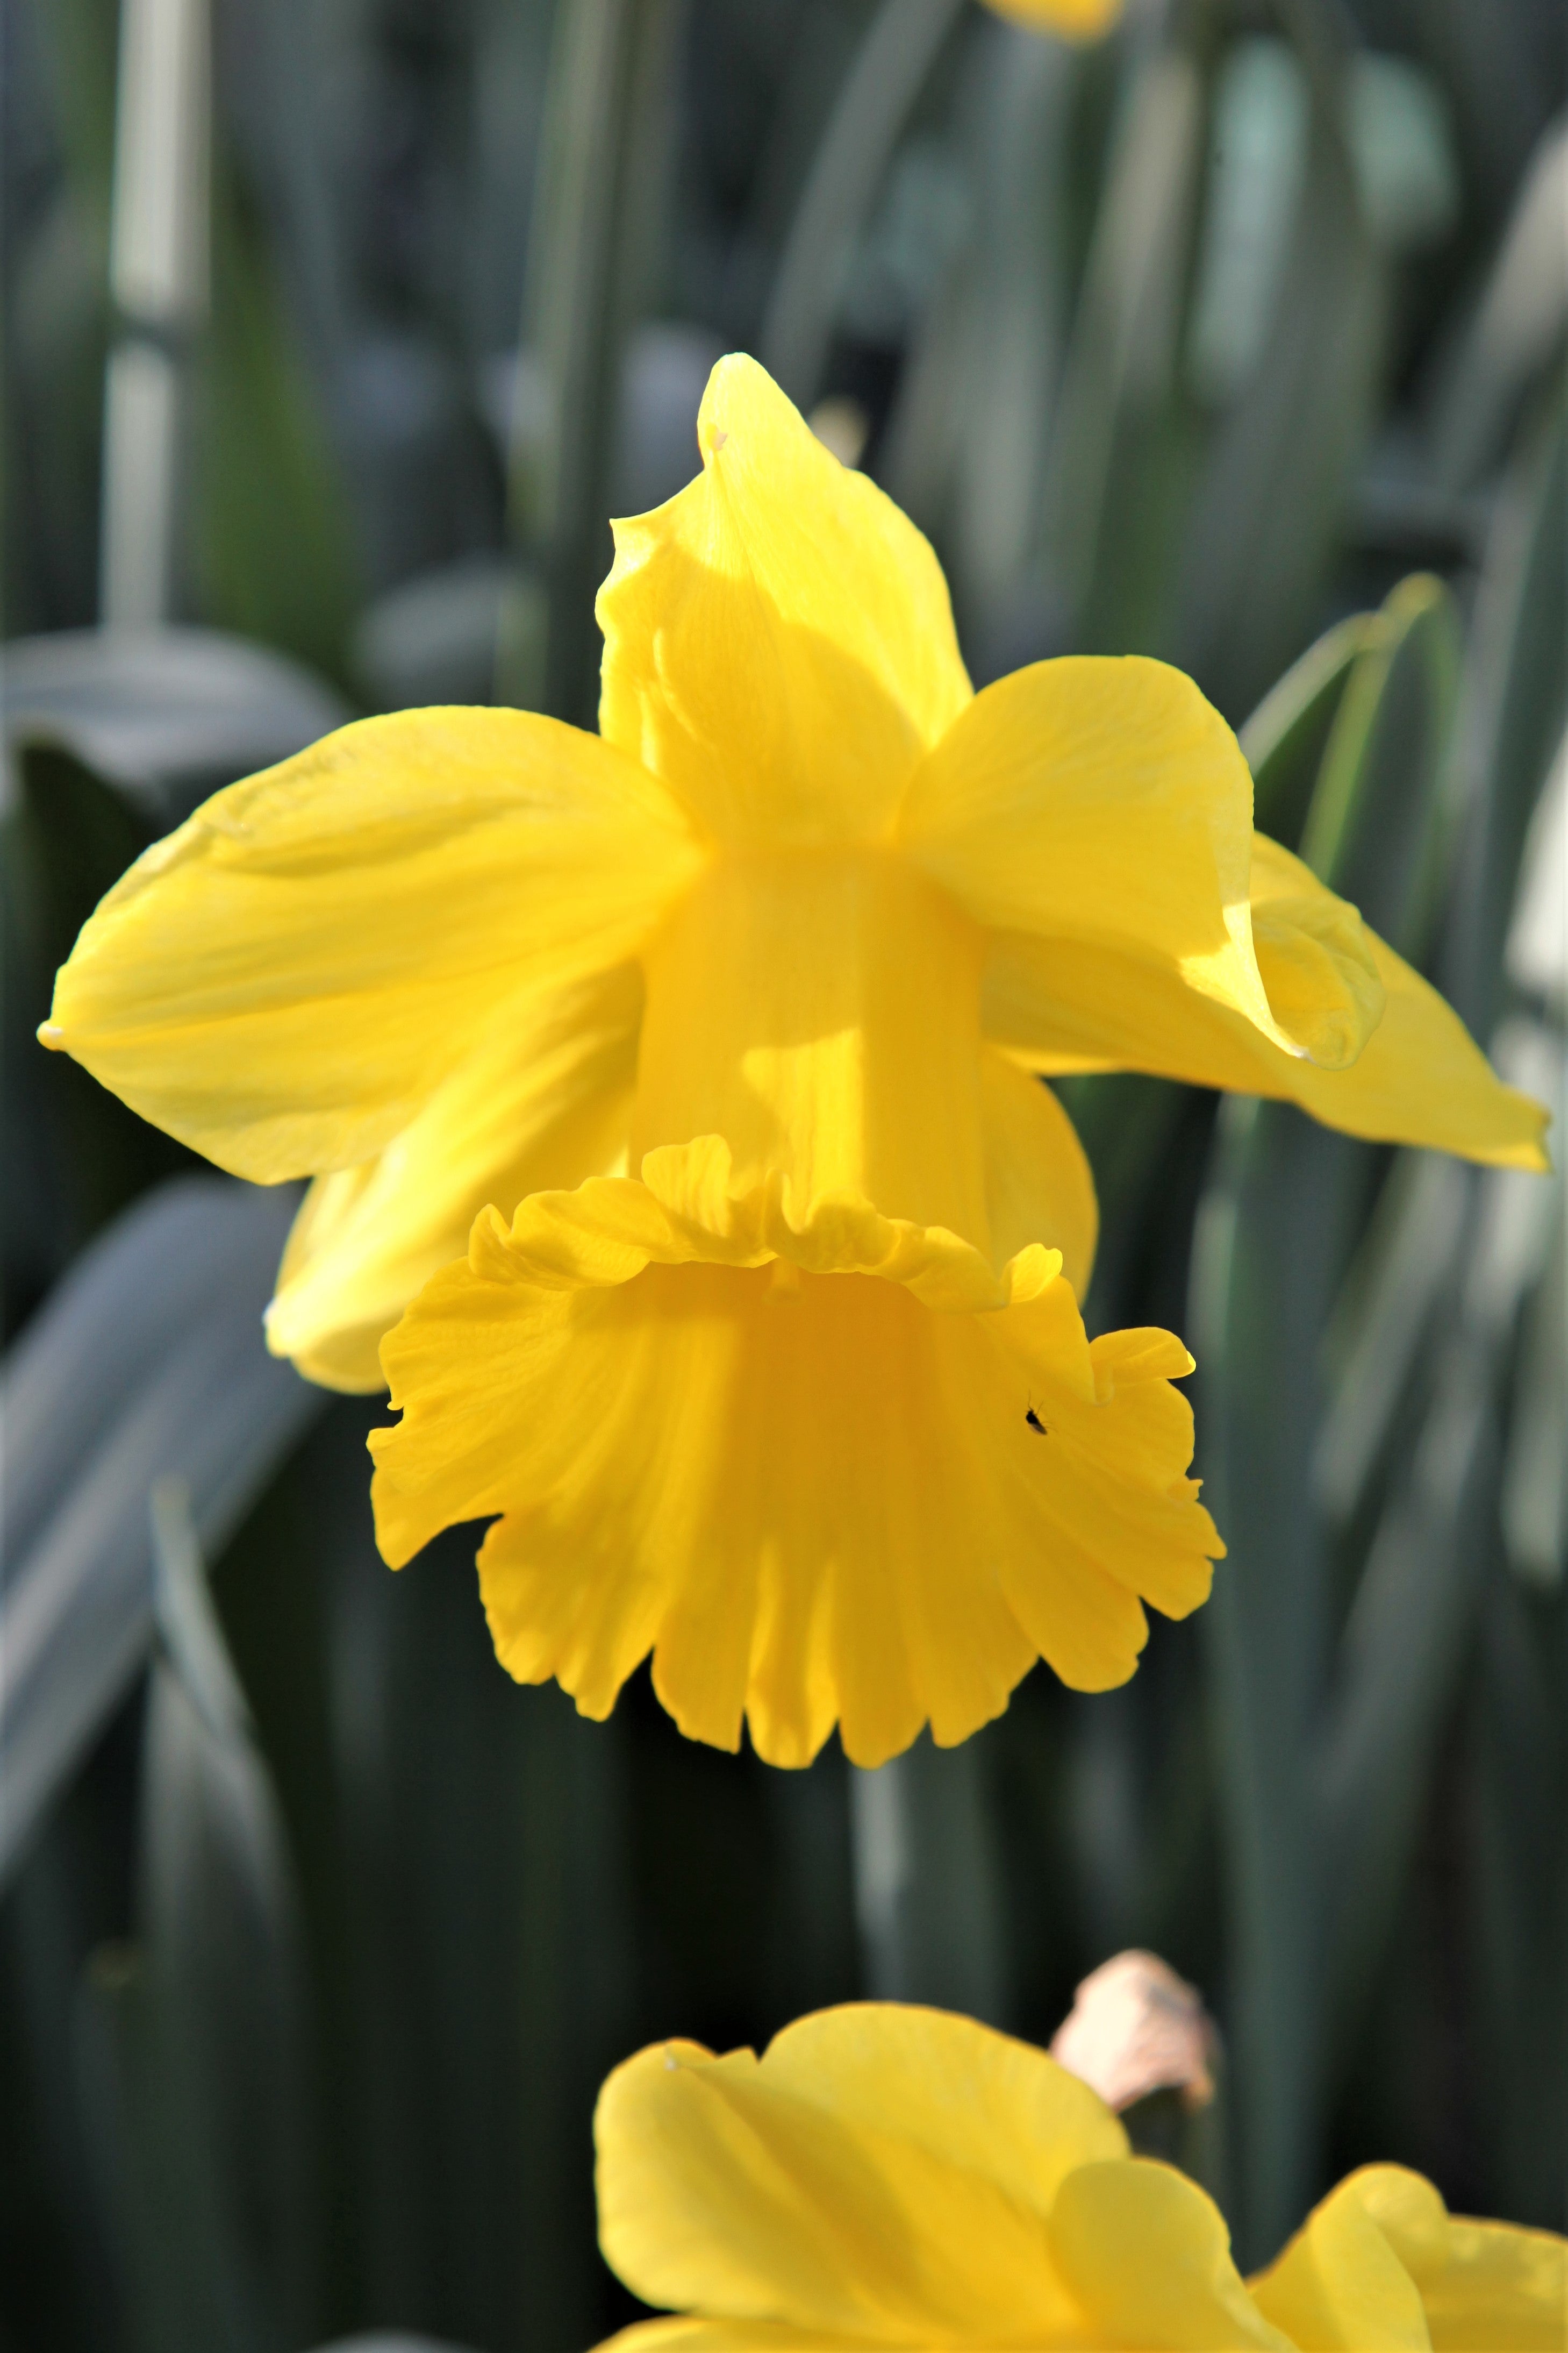 Radiant Exception daffodil: a captivating spring blossom symbolizing hope.